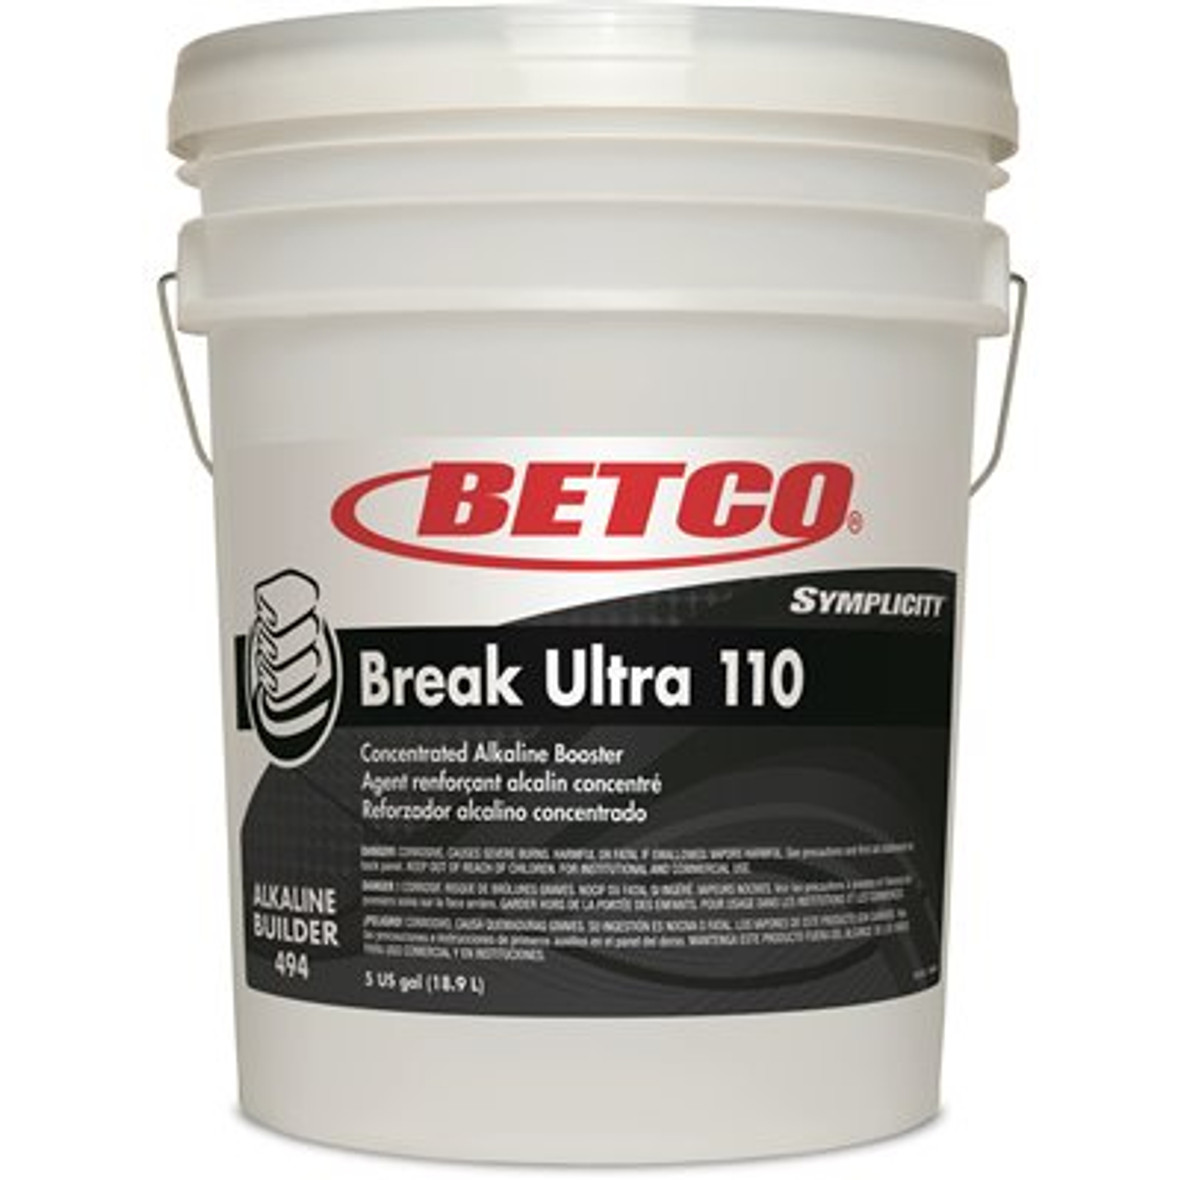 Betco Symplicity Break Ultra 110 Liquid Laundry Detergent, 5 Gallon Pail